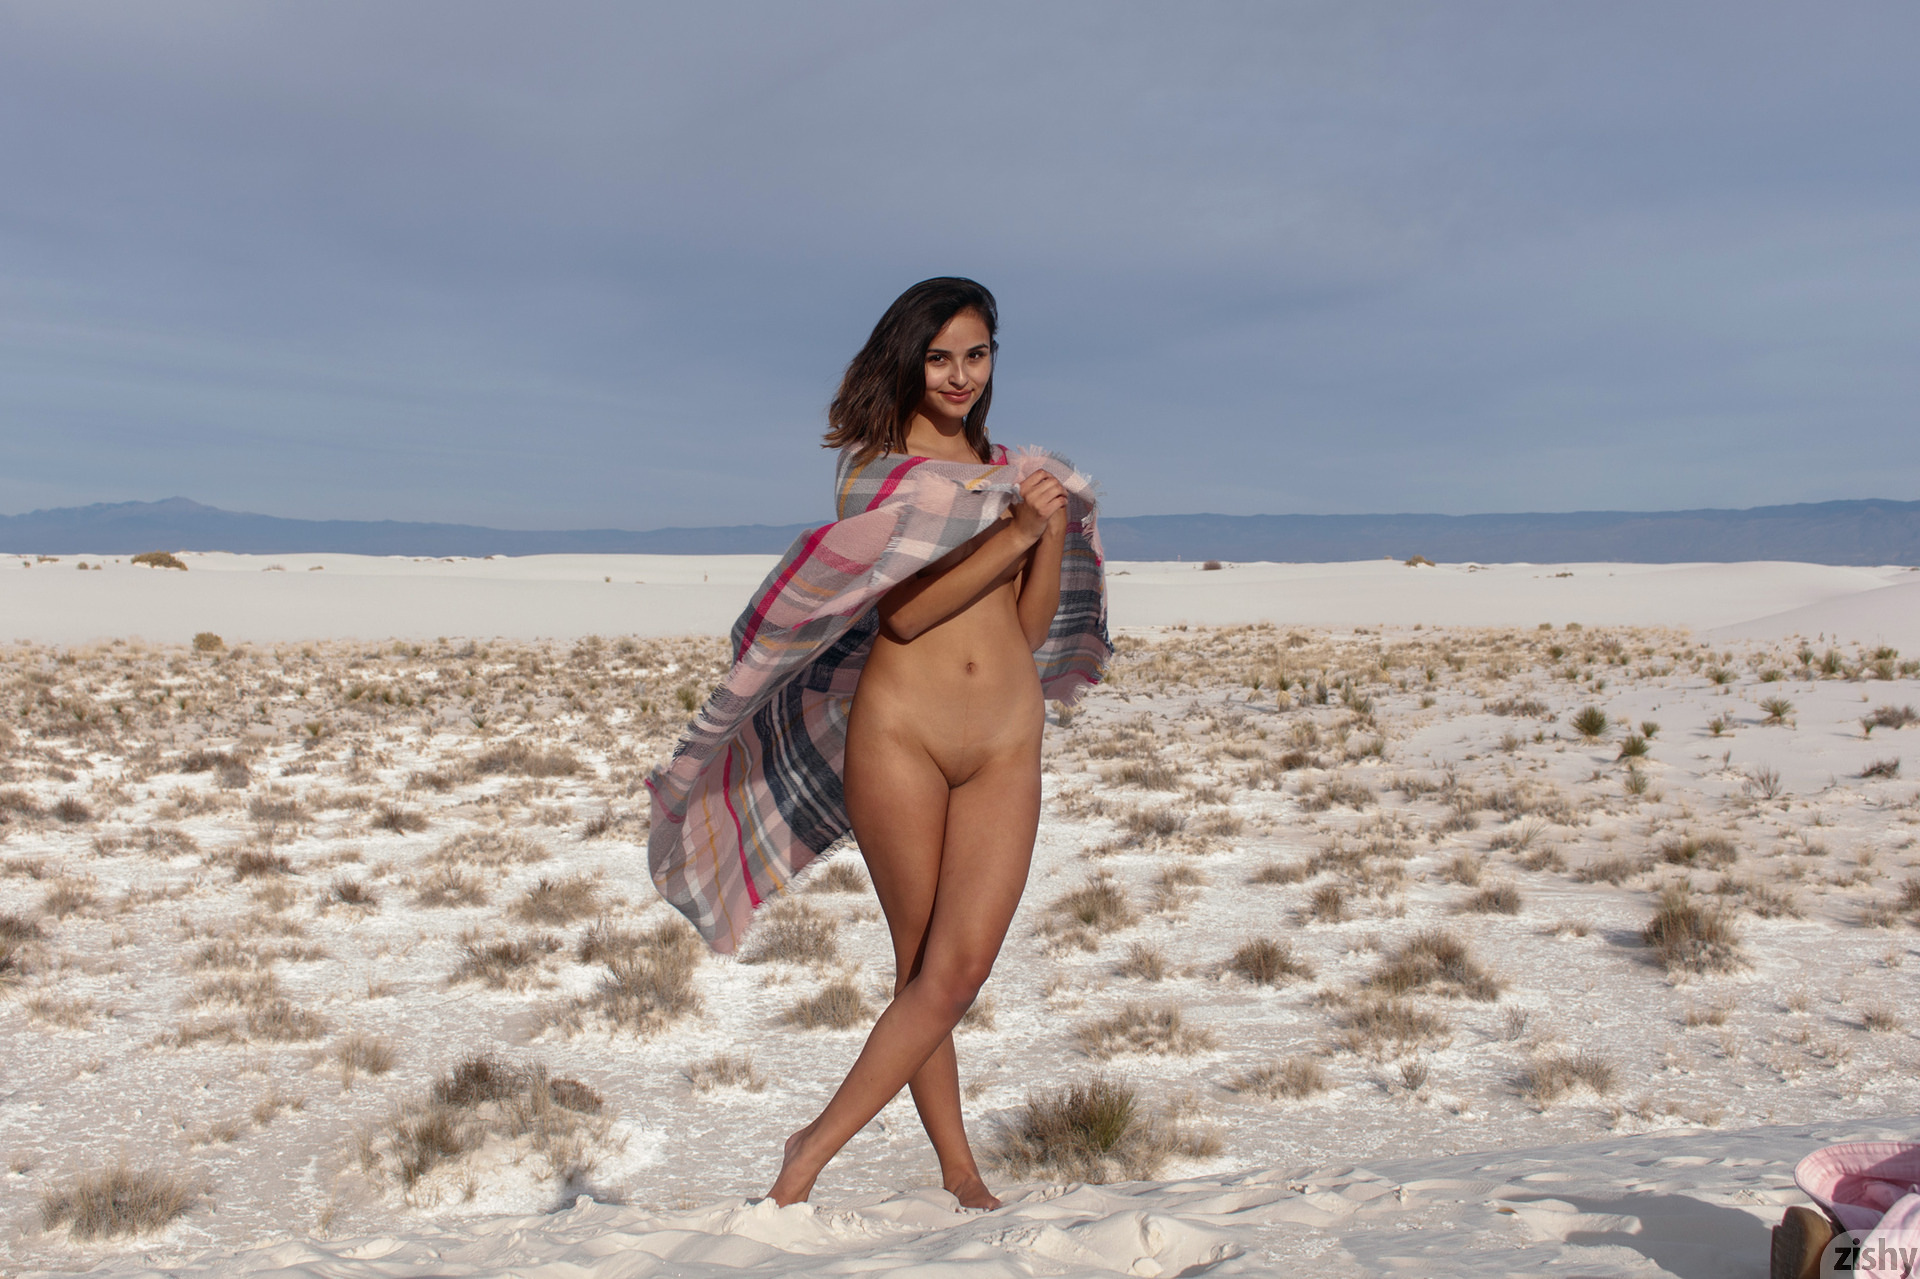 ZH-2019-11-27 - Alejandra Cobos - White Sands 3 (1).jpg